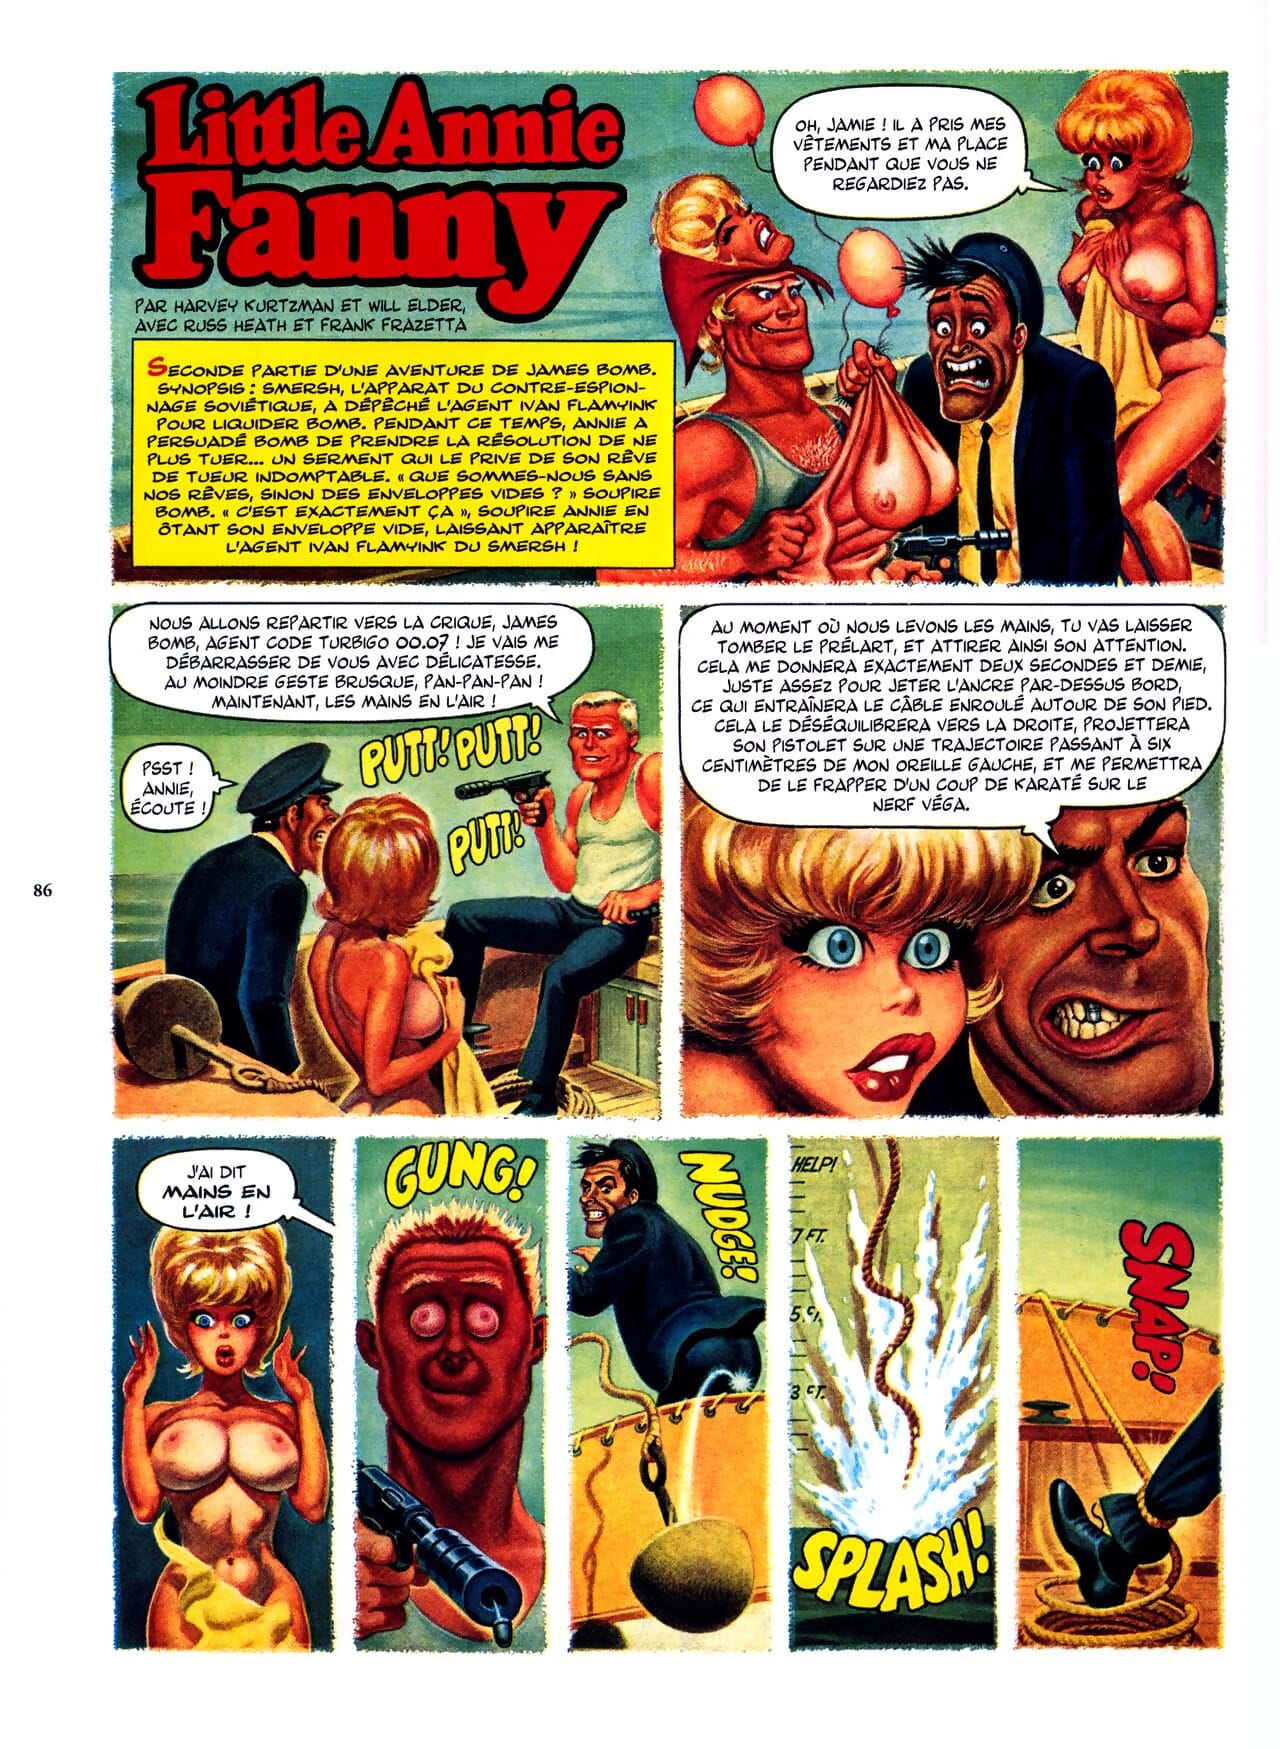 Playboys Little Annie Fanny Vol. 1 - 1962-1965 - part 5 page 1